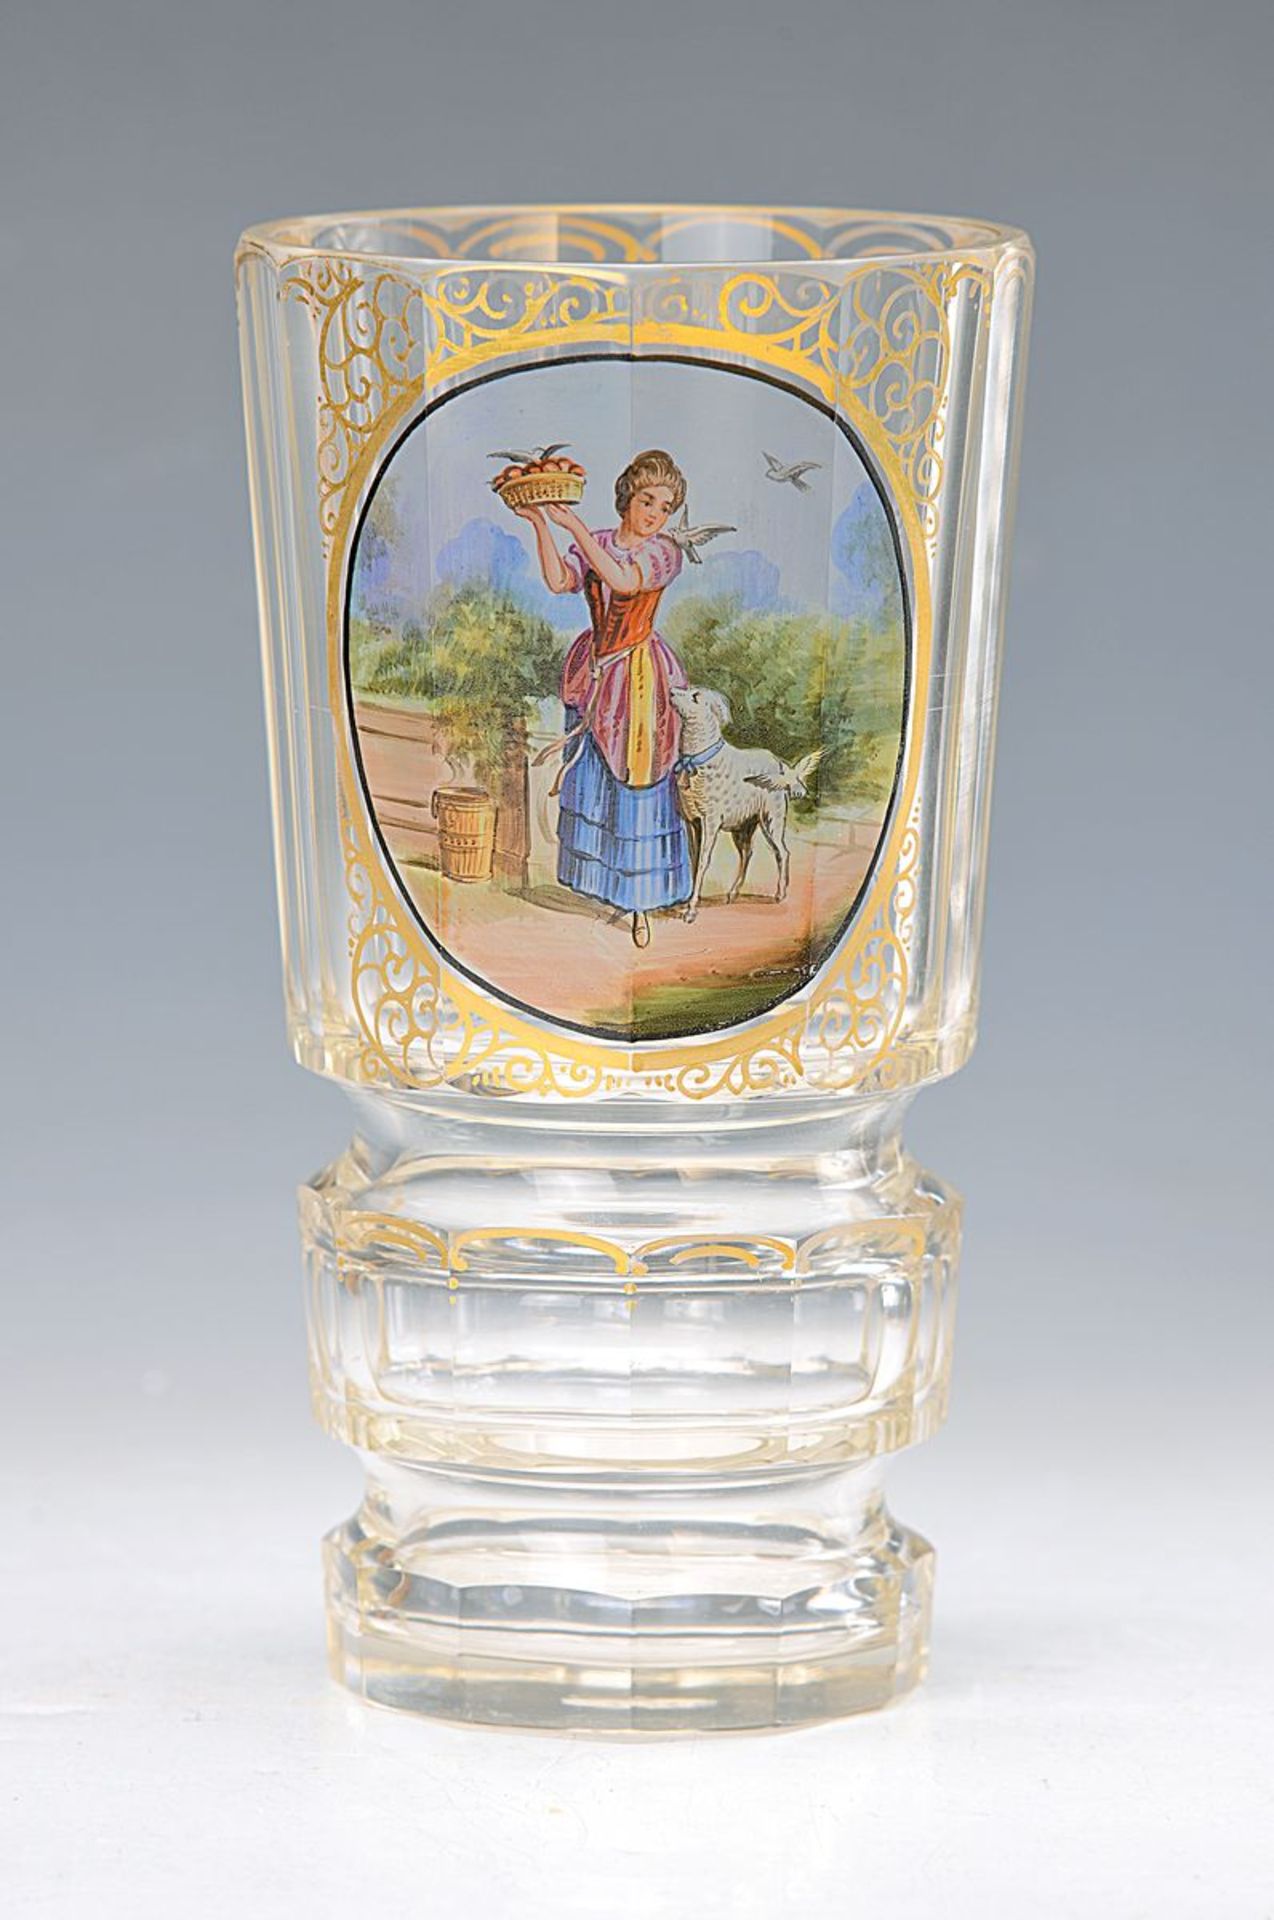 Großes Becherglas, Böhmen, Mitte 19. Jh., farbloses facettiertes Glas, in goldgerahmter Kartusche